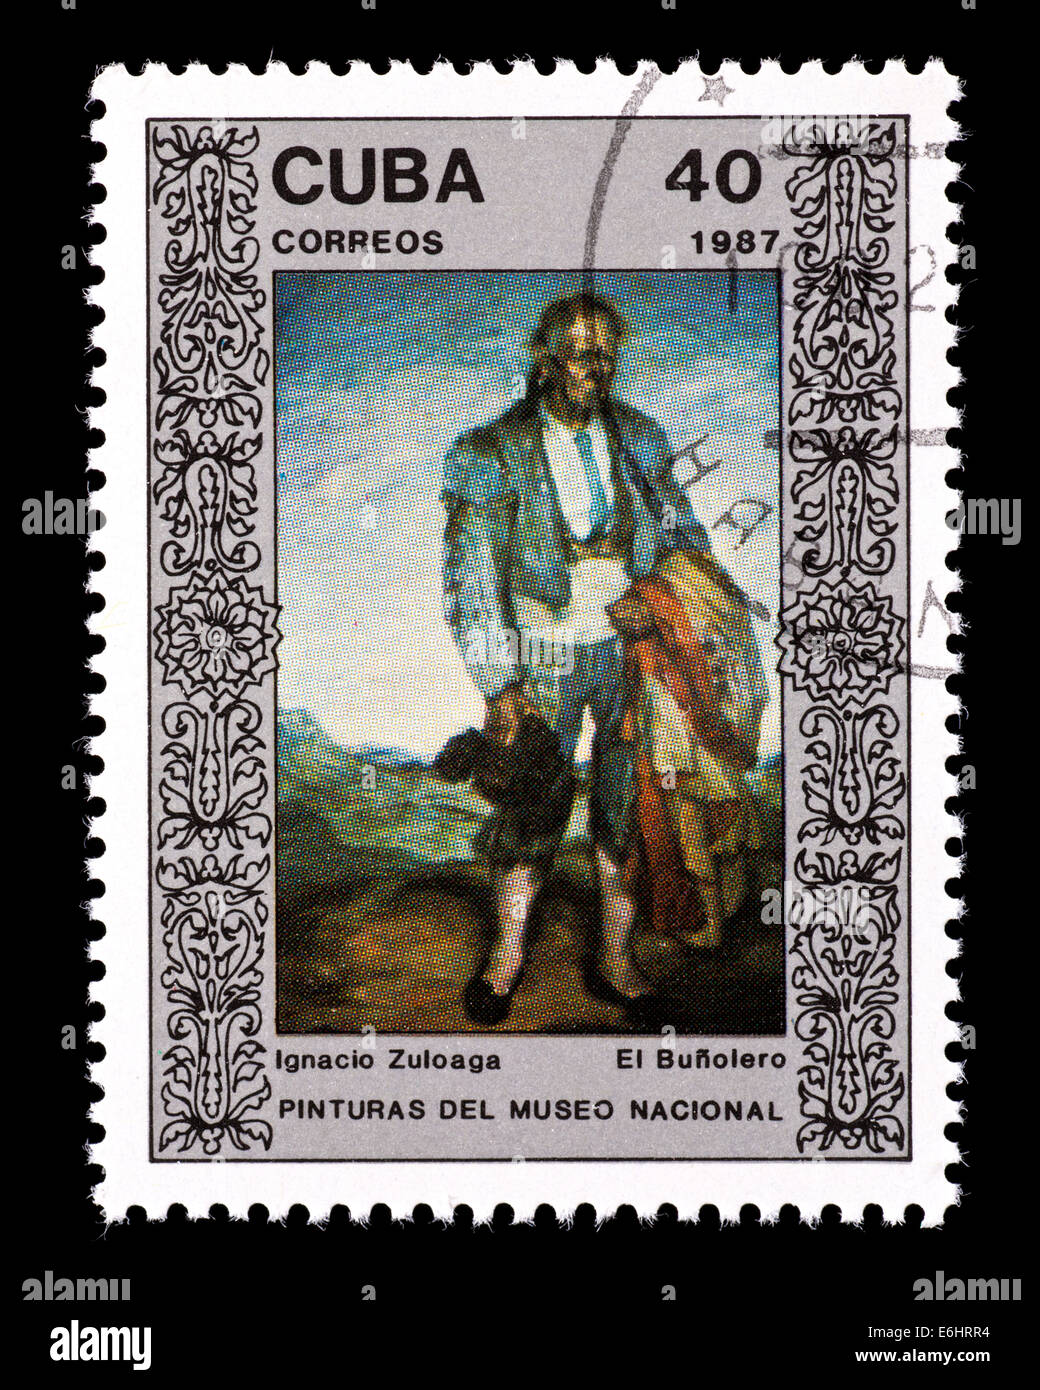 Timbre-poste de Cuba représentant l'Ignacio Zuloaga peinture 'l'échec (défaite de torero)' Banque D'Images